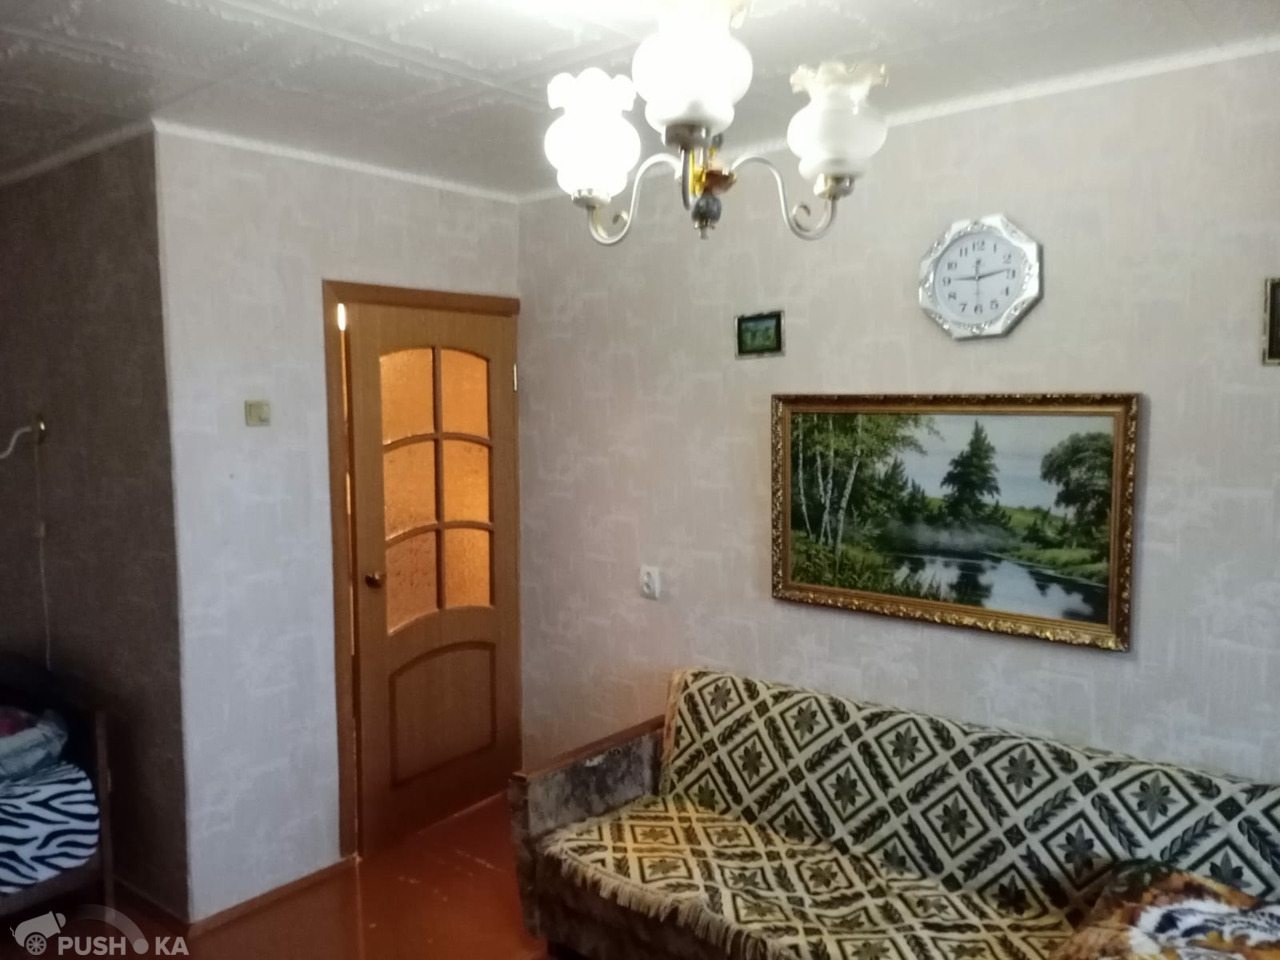 Продаётся 1-комнатная квартира 32.0 кв.м. этаж 7/10 за 2 500 000 руб 